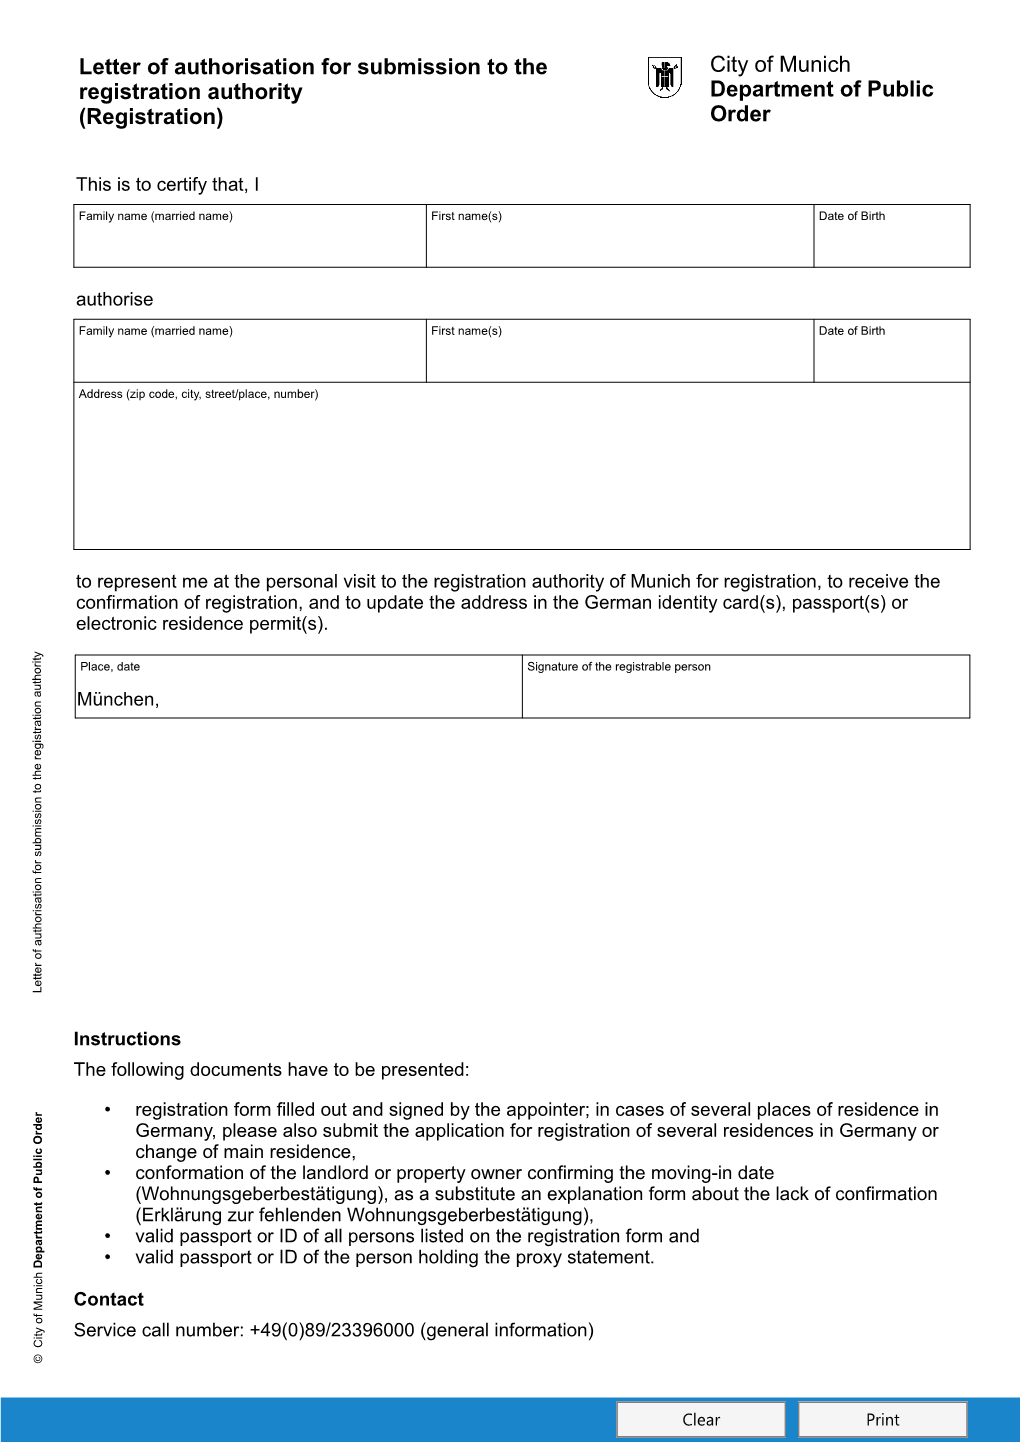 (Registration) City of Munich Department of Public Order